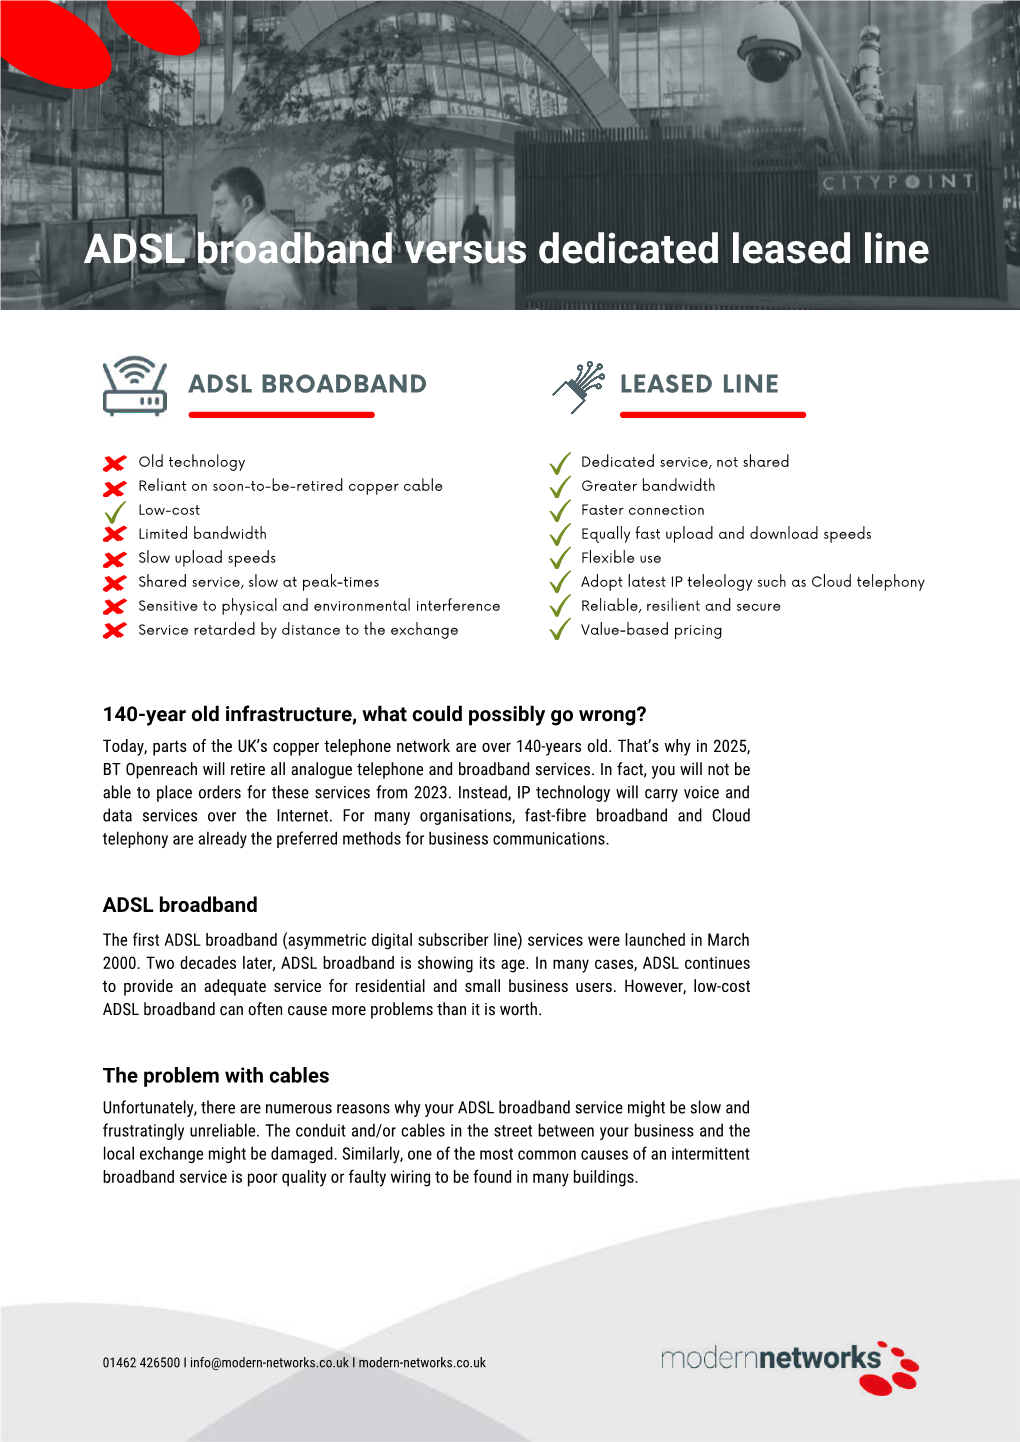 ADSL Broadband Versus a Dedicated Leased Line